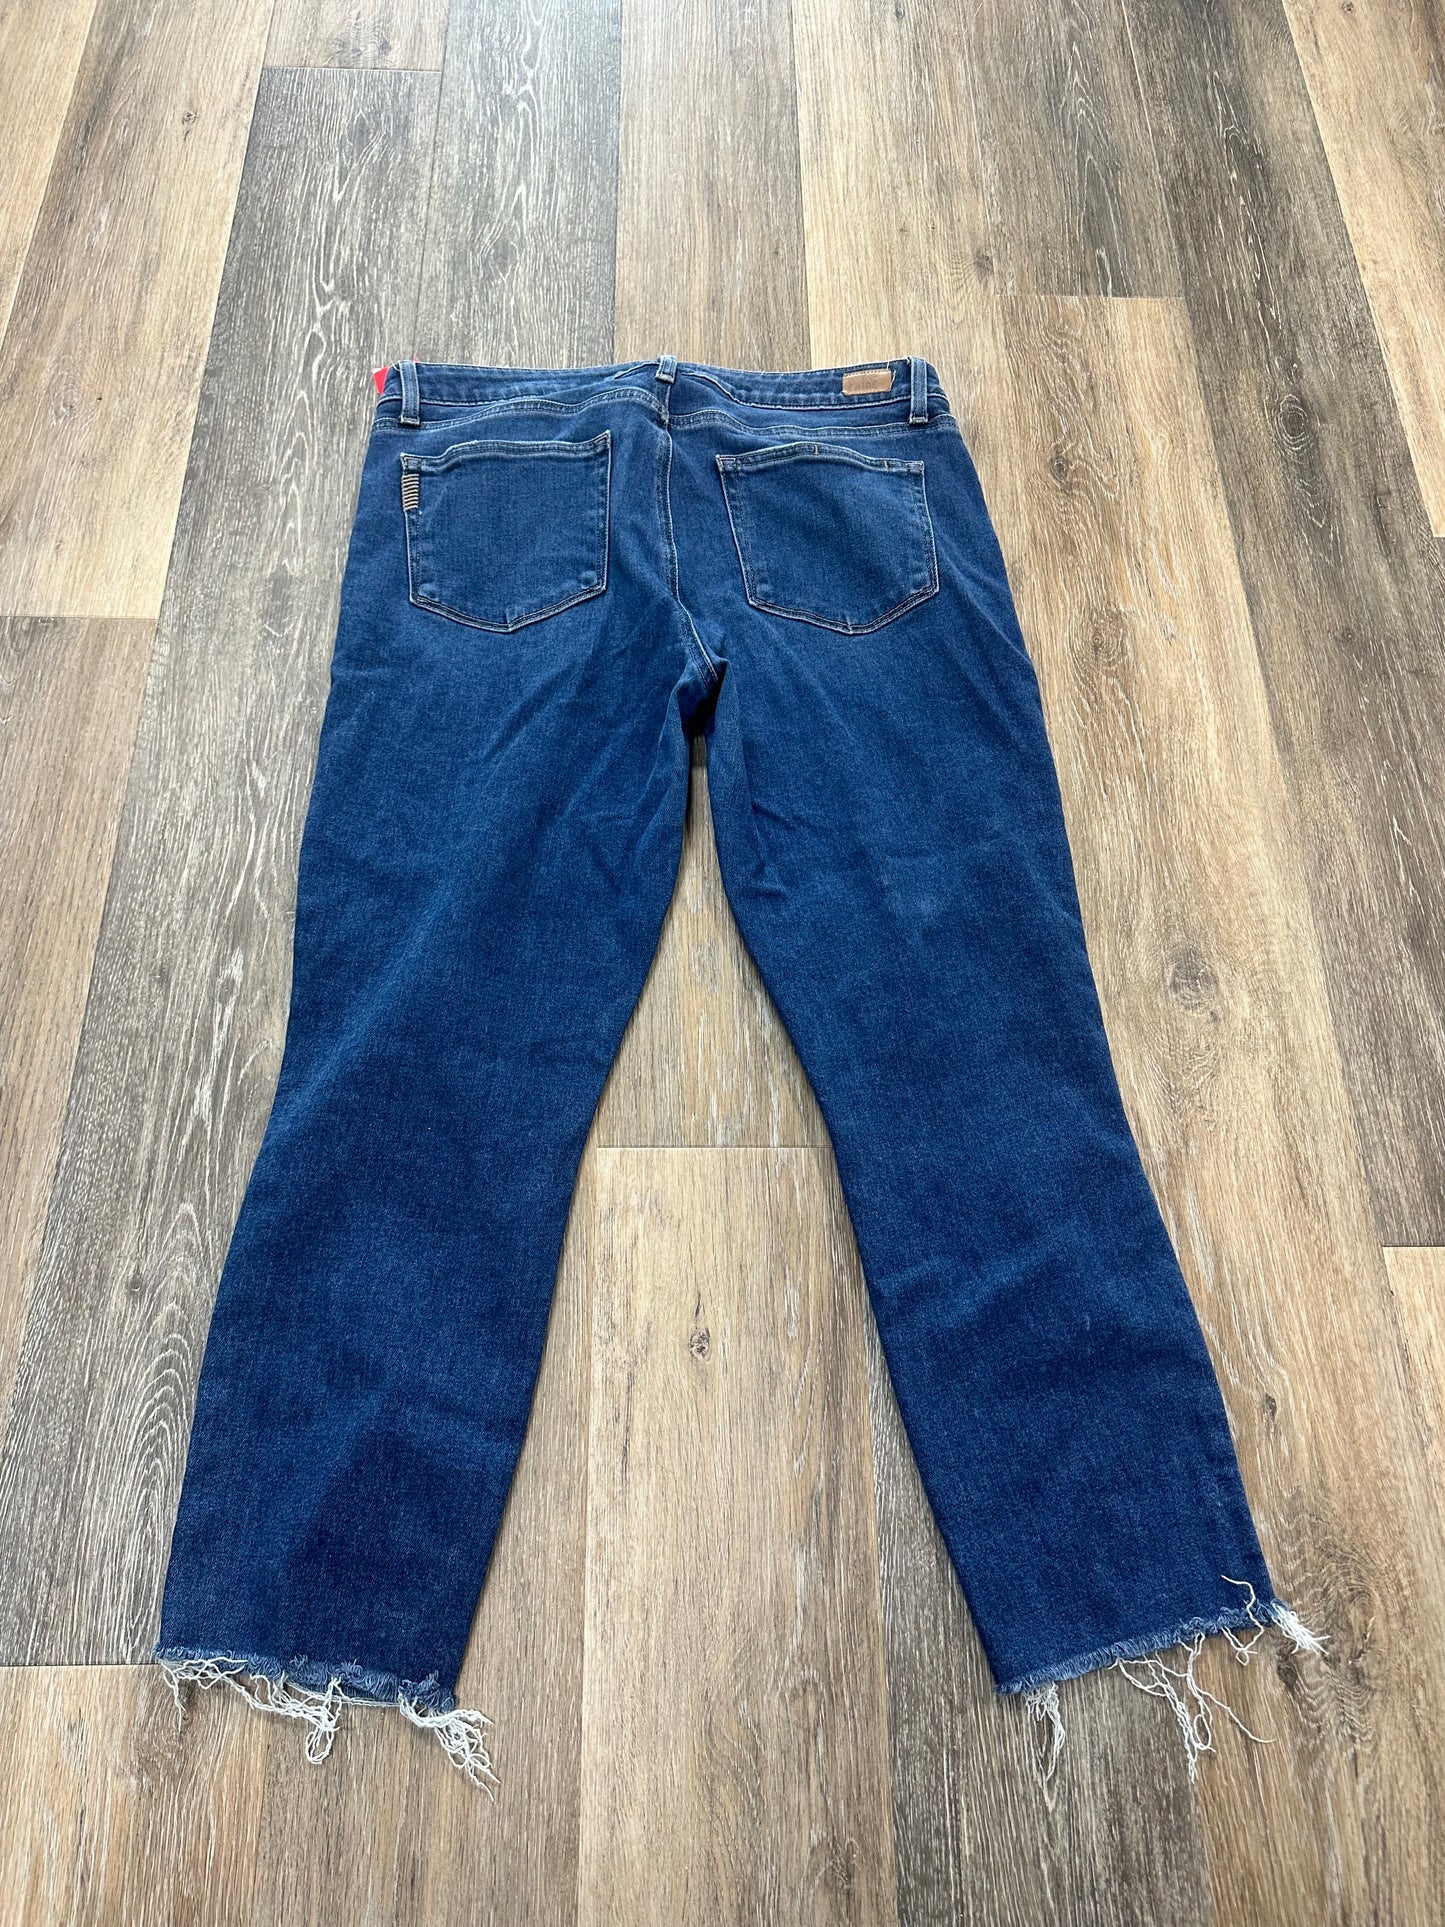 Blue Denim Jeans Designer Paige, Size 14/32